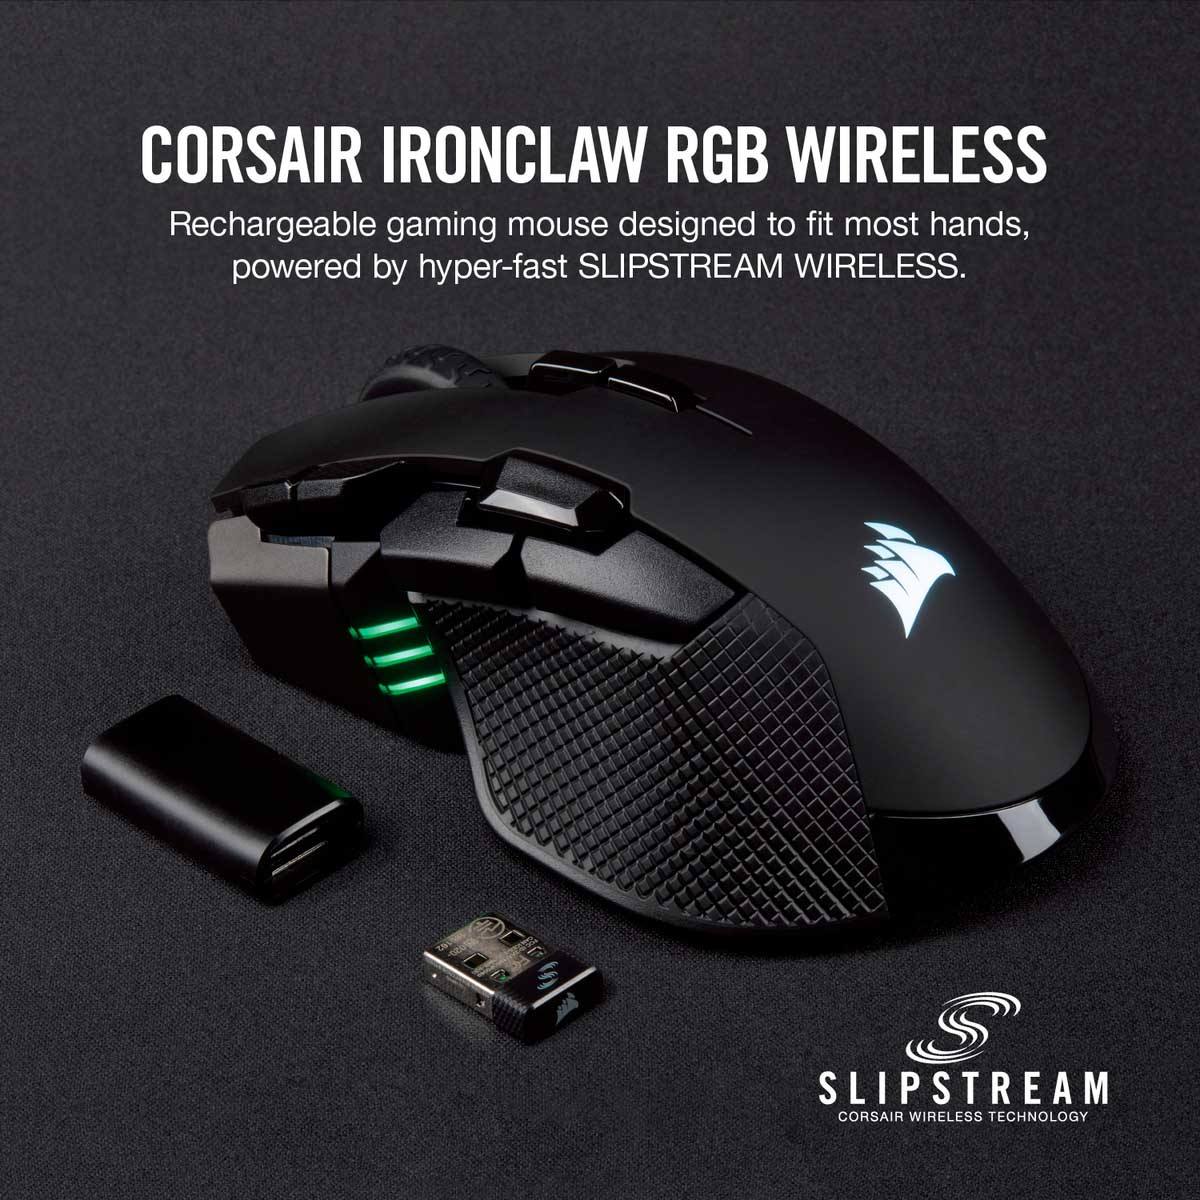 Chuột Corsair Iron Claw RGB Wireless